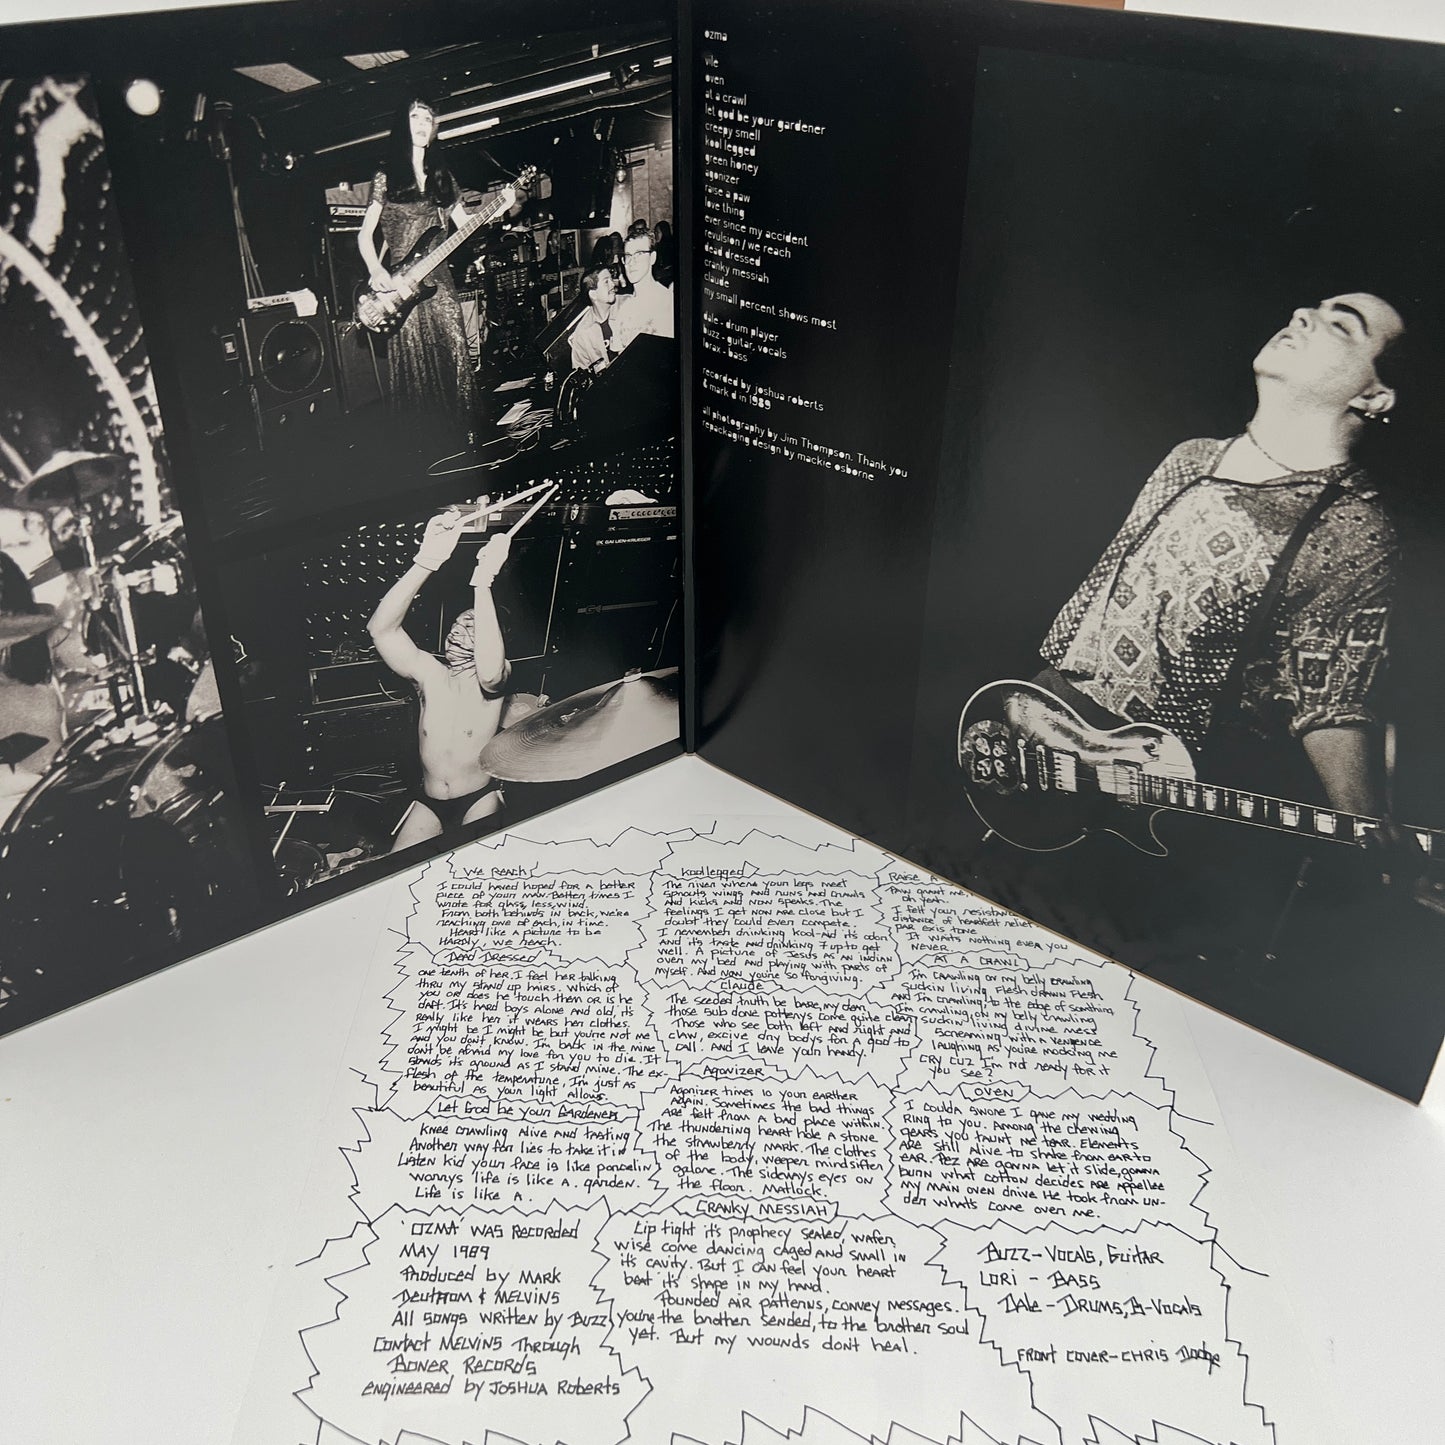 Melvins - Ozma Vinyl LP Reissue